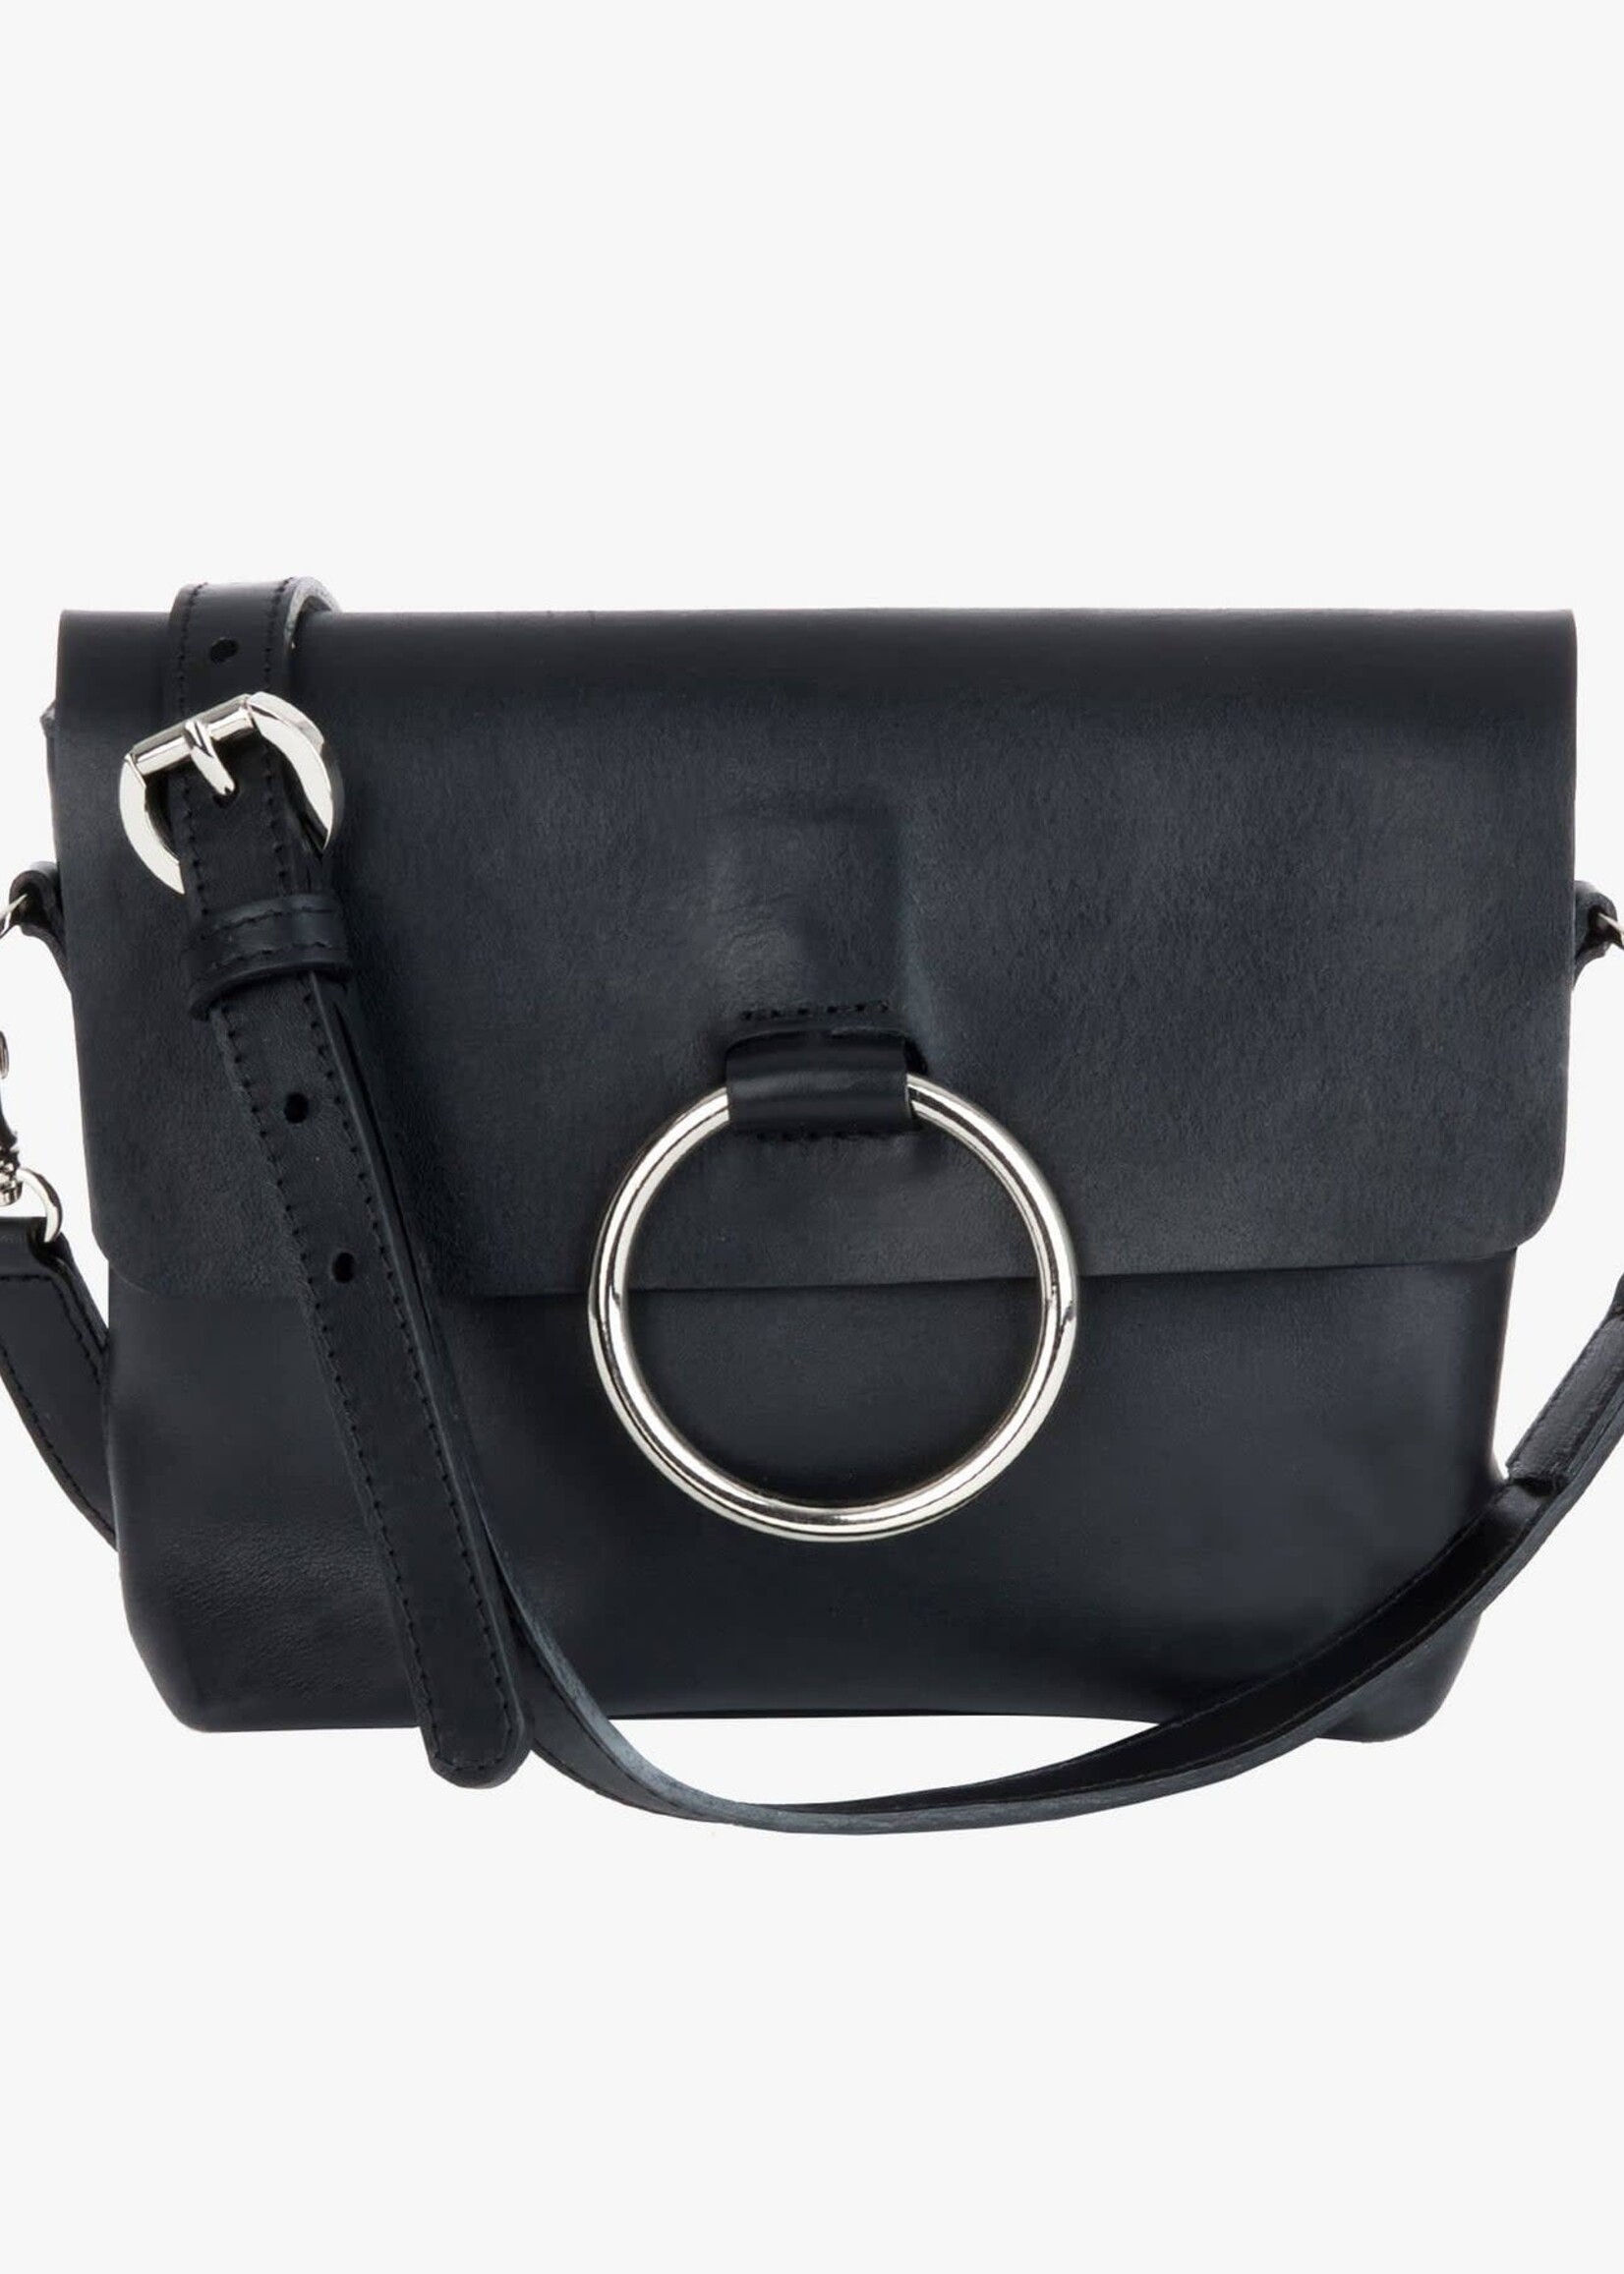 BRAVE LEATHER VIRTUE  MINI leather purse